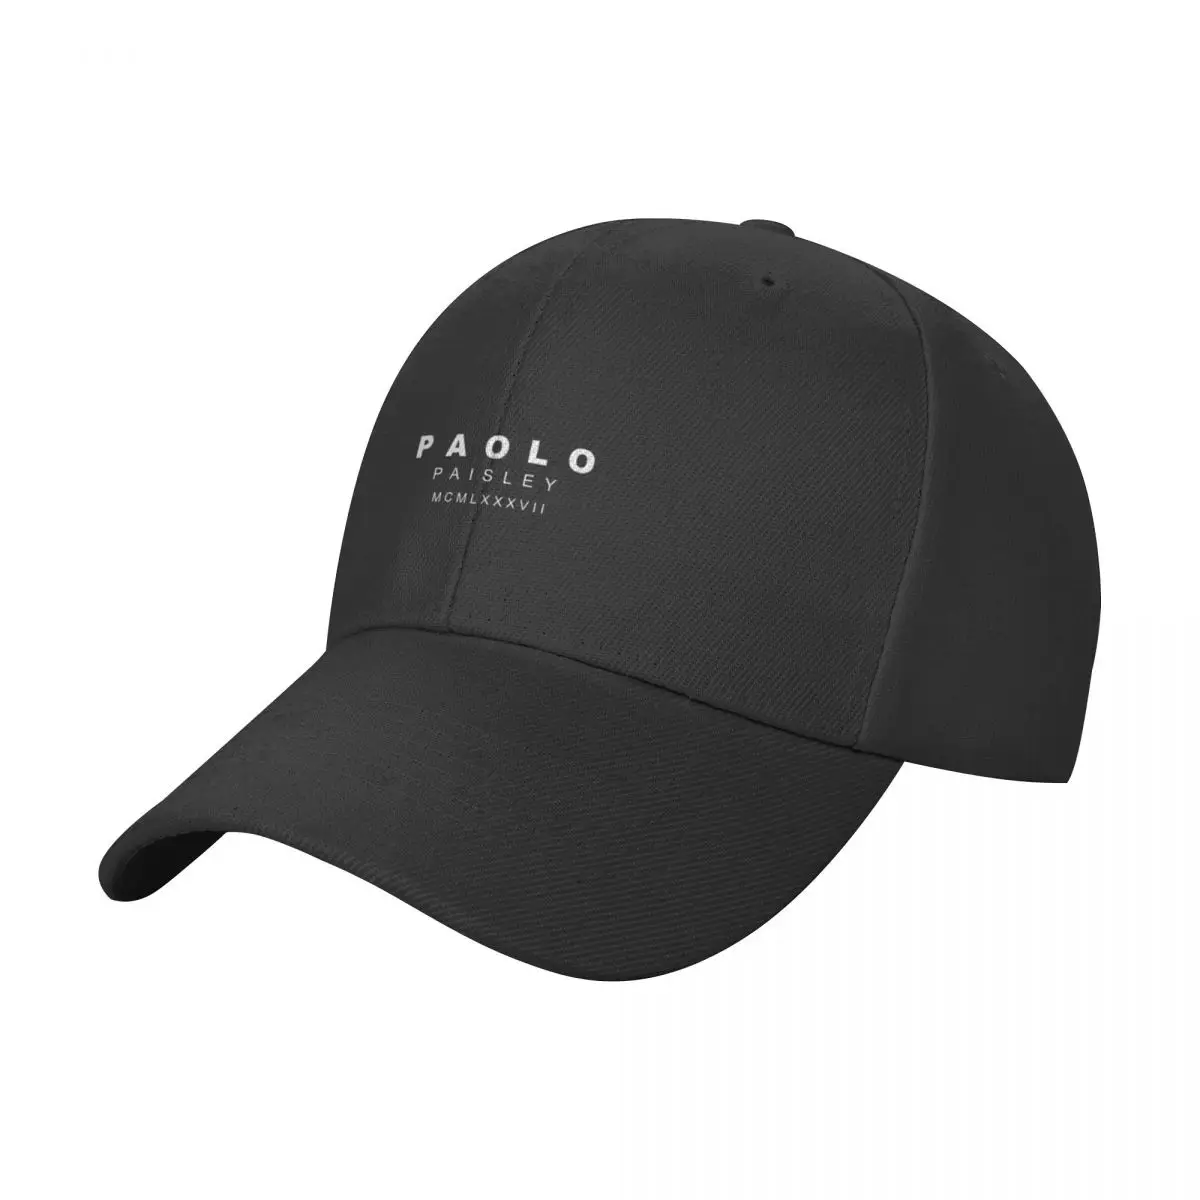 

Paolo 1987 бейсболка черная одежда для гольфа женские кепки мужские